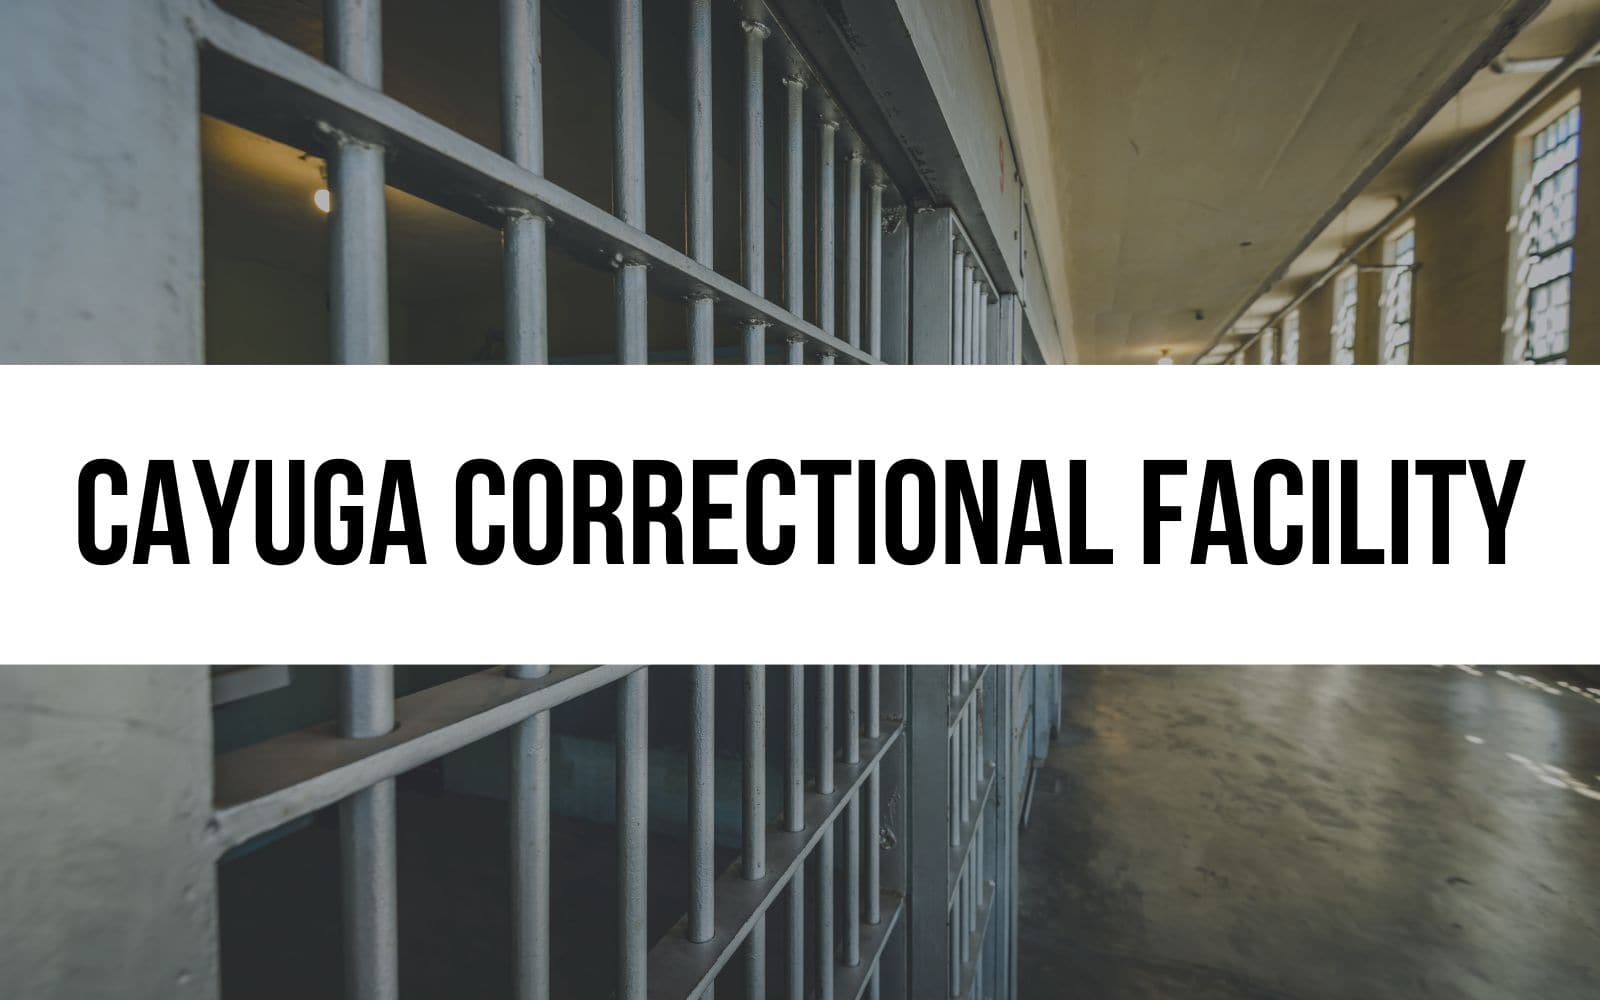 Cayuga Correctional Facility